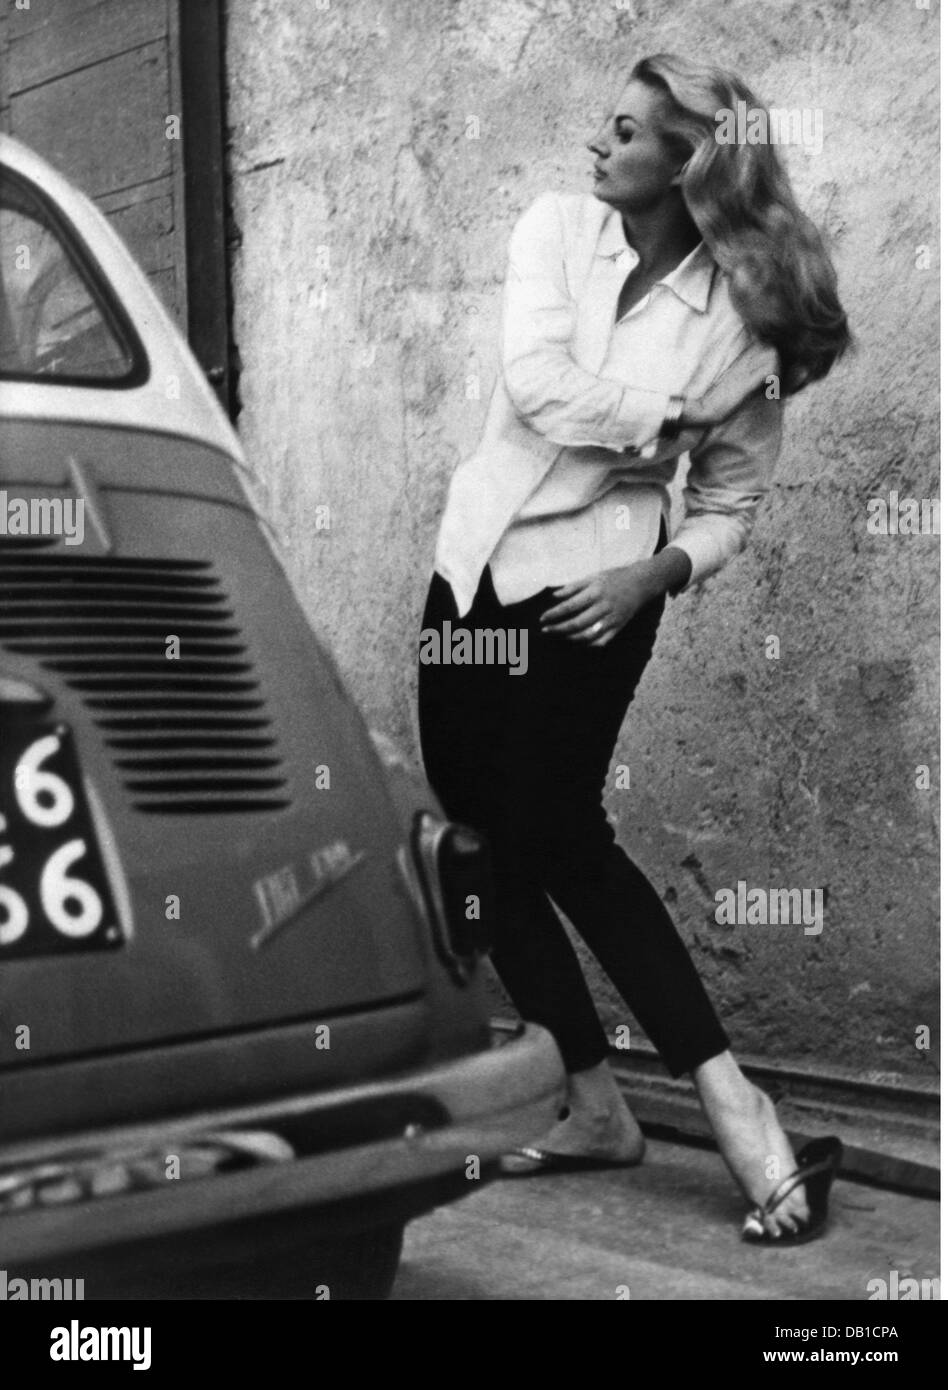 Ekberg, Anita, 29.9.1931 - 11.1.2015, Swedish actress, full length, combing her hair, Rome, 22.9.1958, Stock Photo